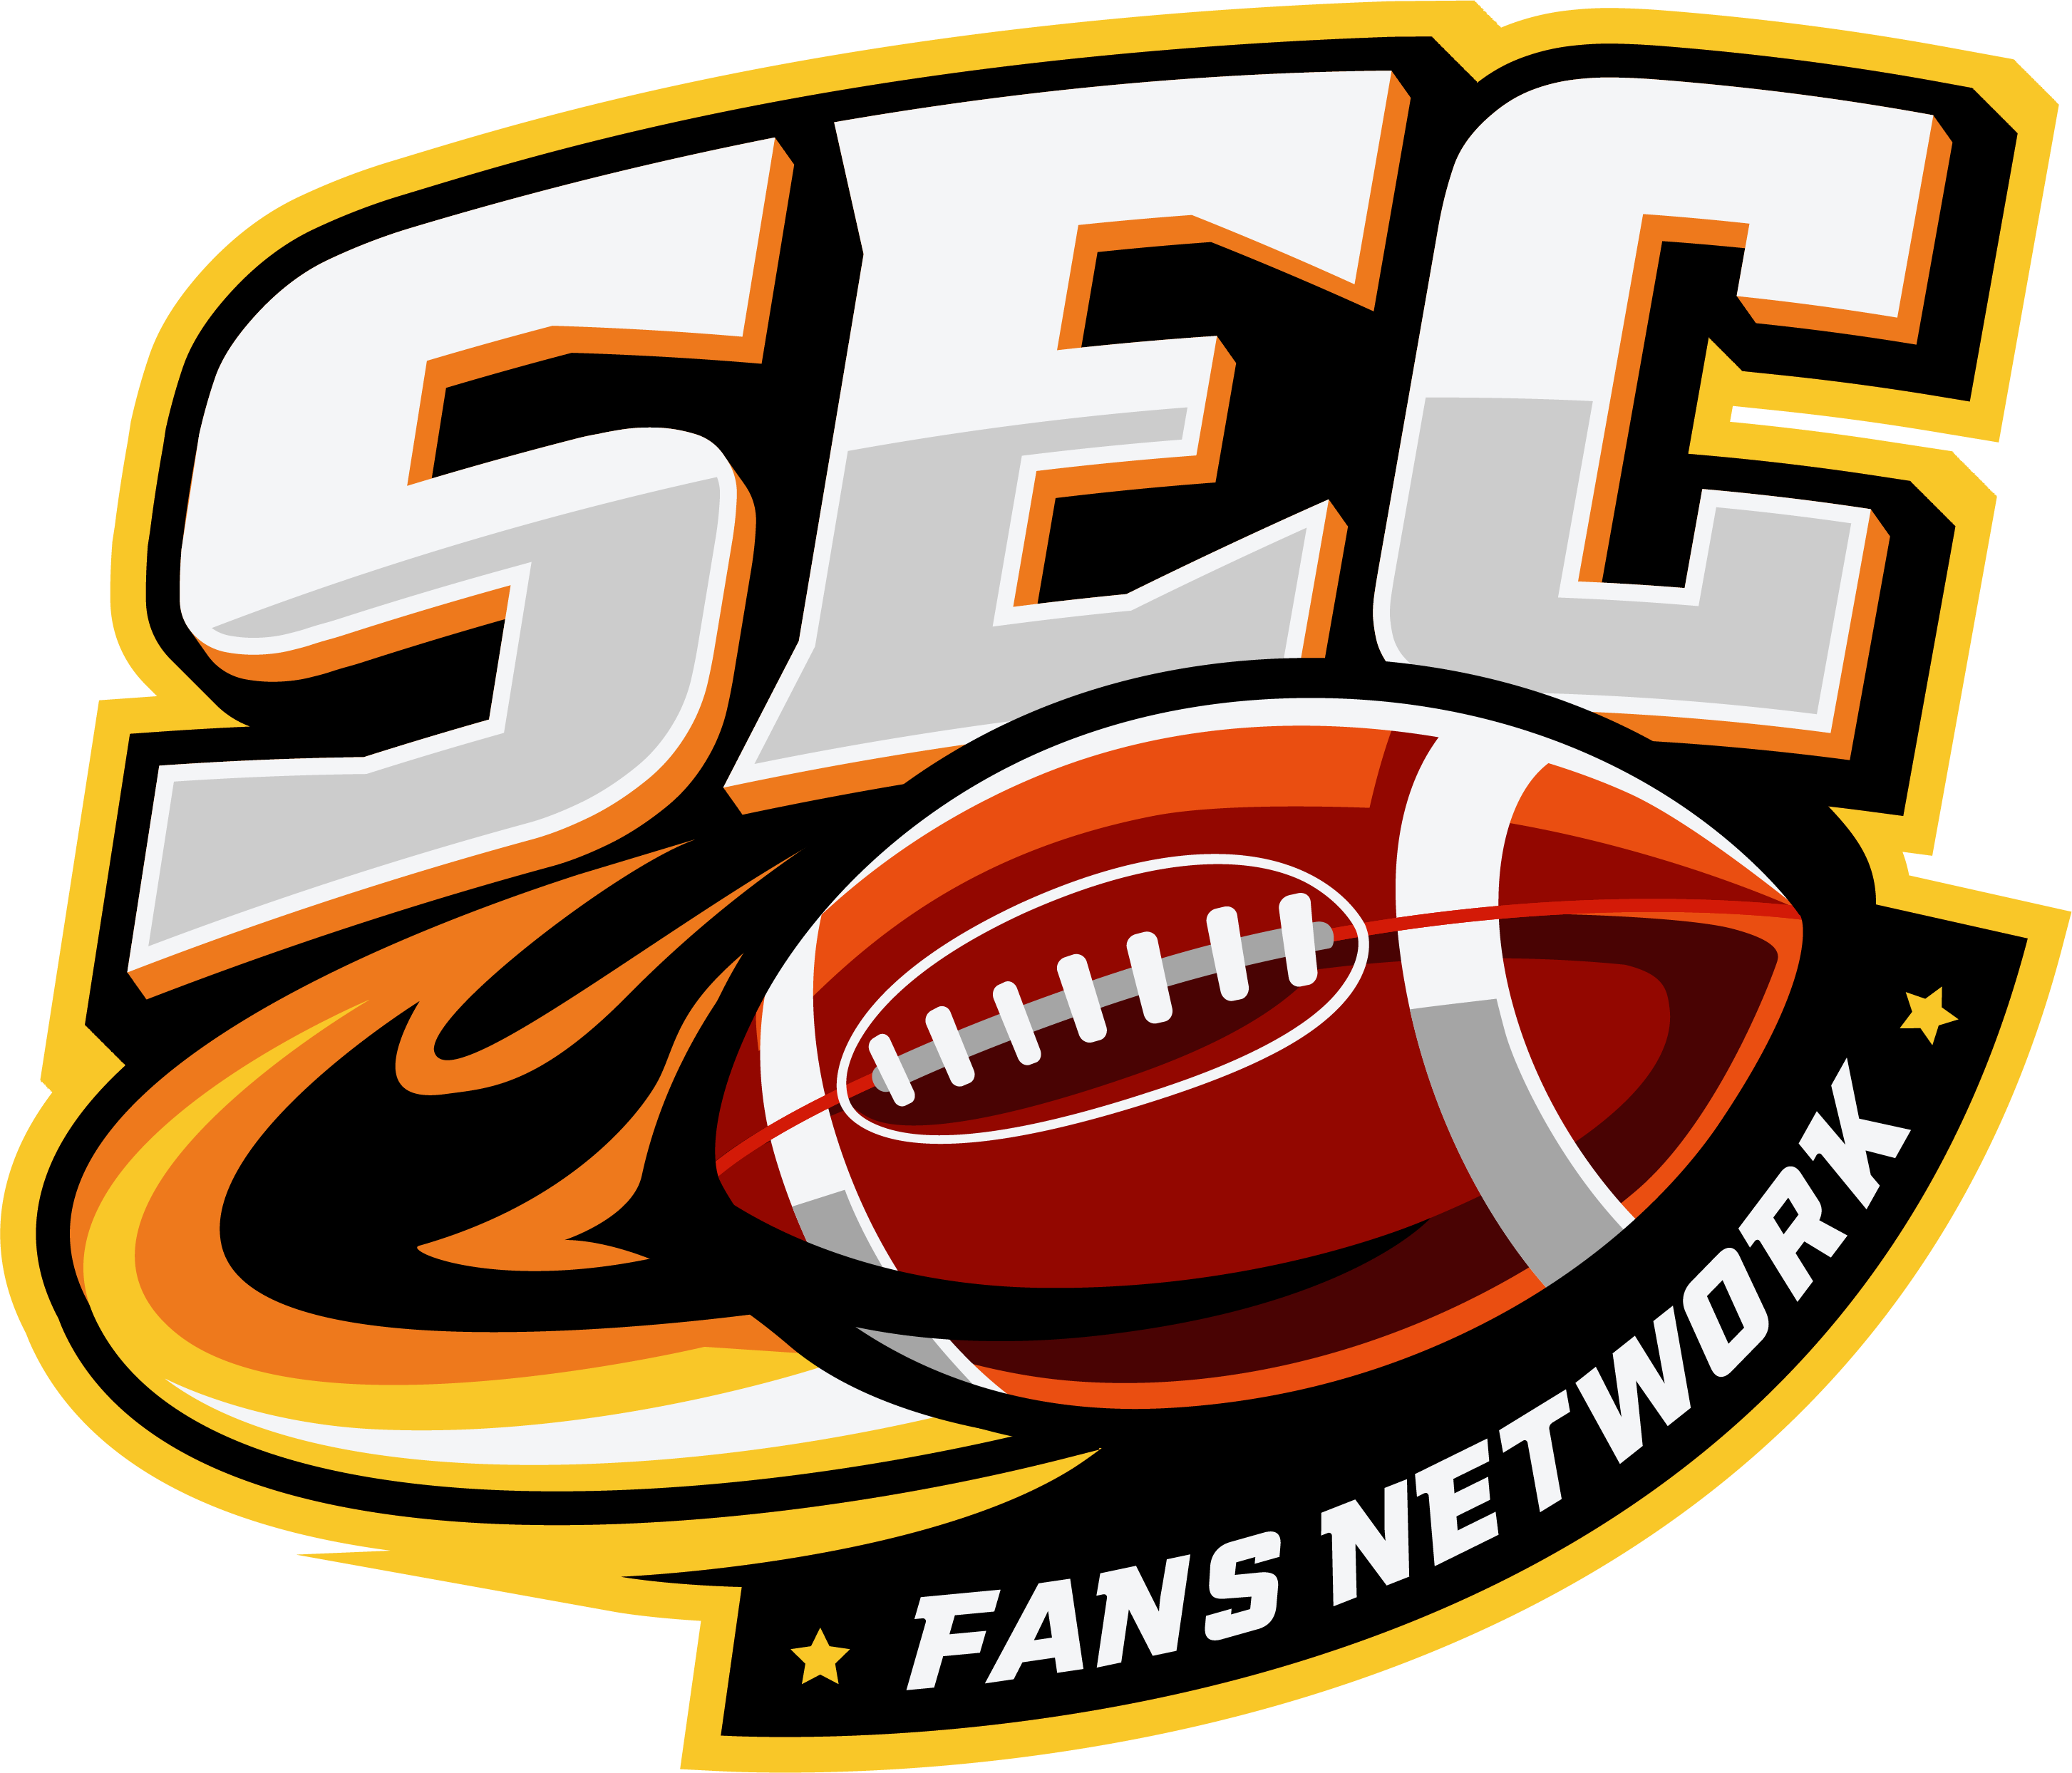 SEC Fans Network